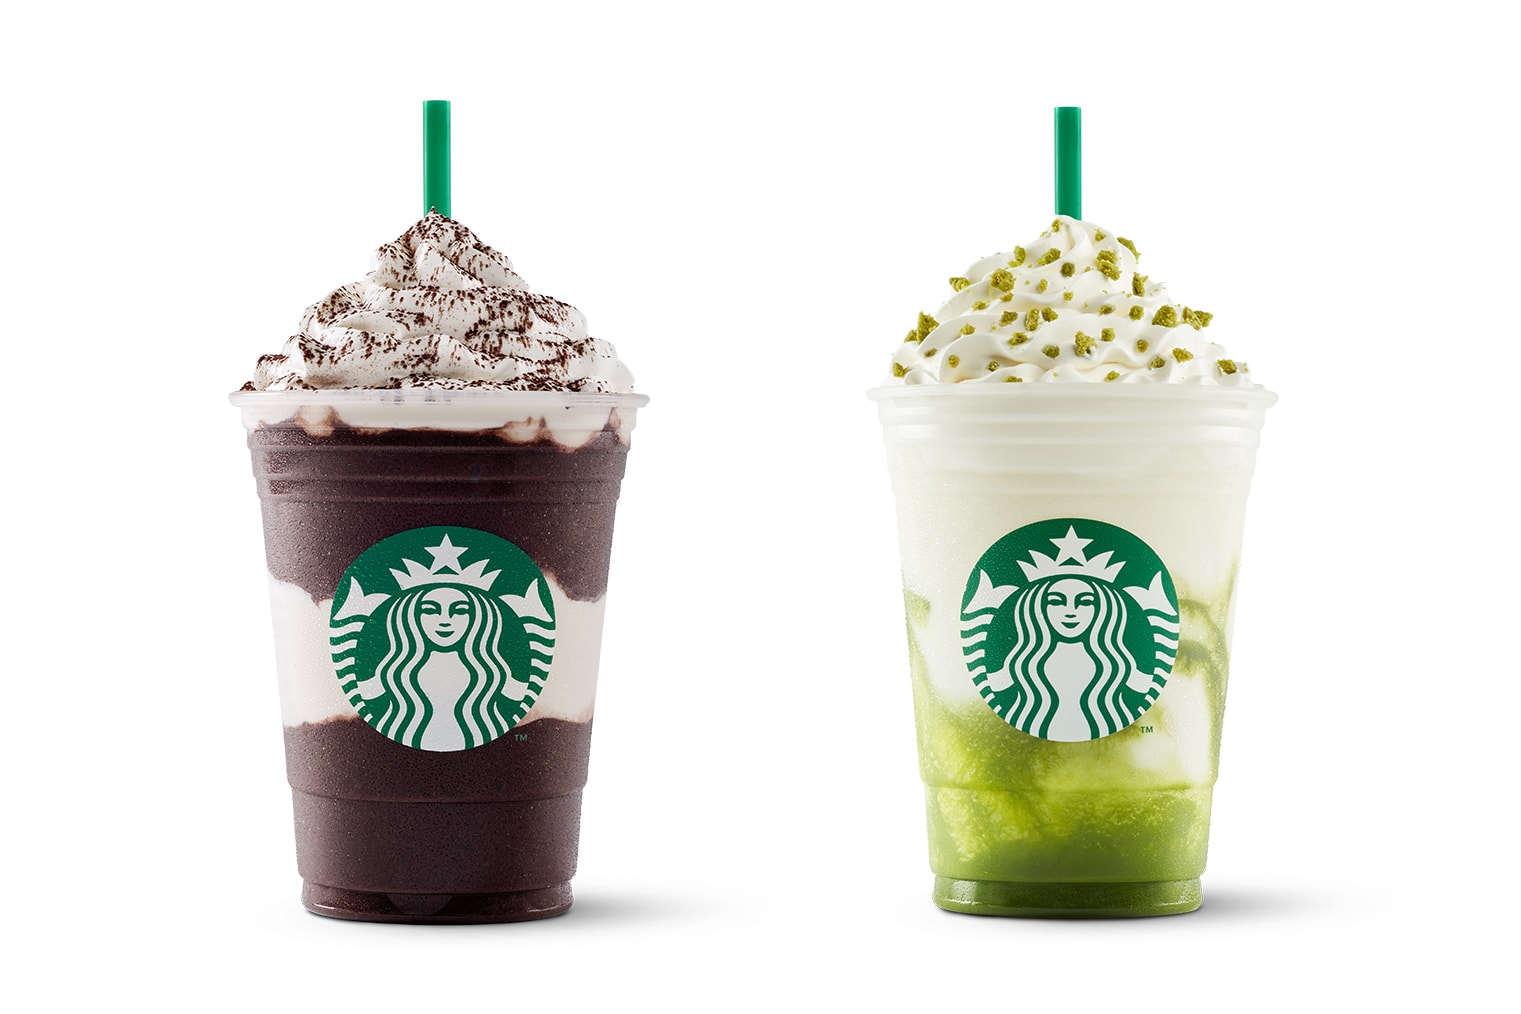 Starbucks Frappuccino Midnight Mocha Tiramisu Drink Beverage Chocolate Tea Matcha Green Tea Cream